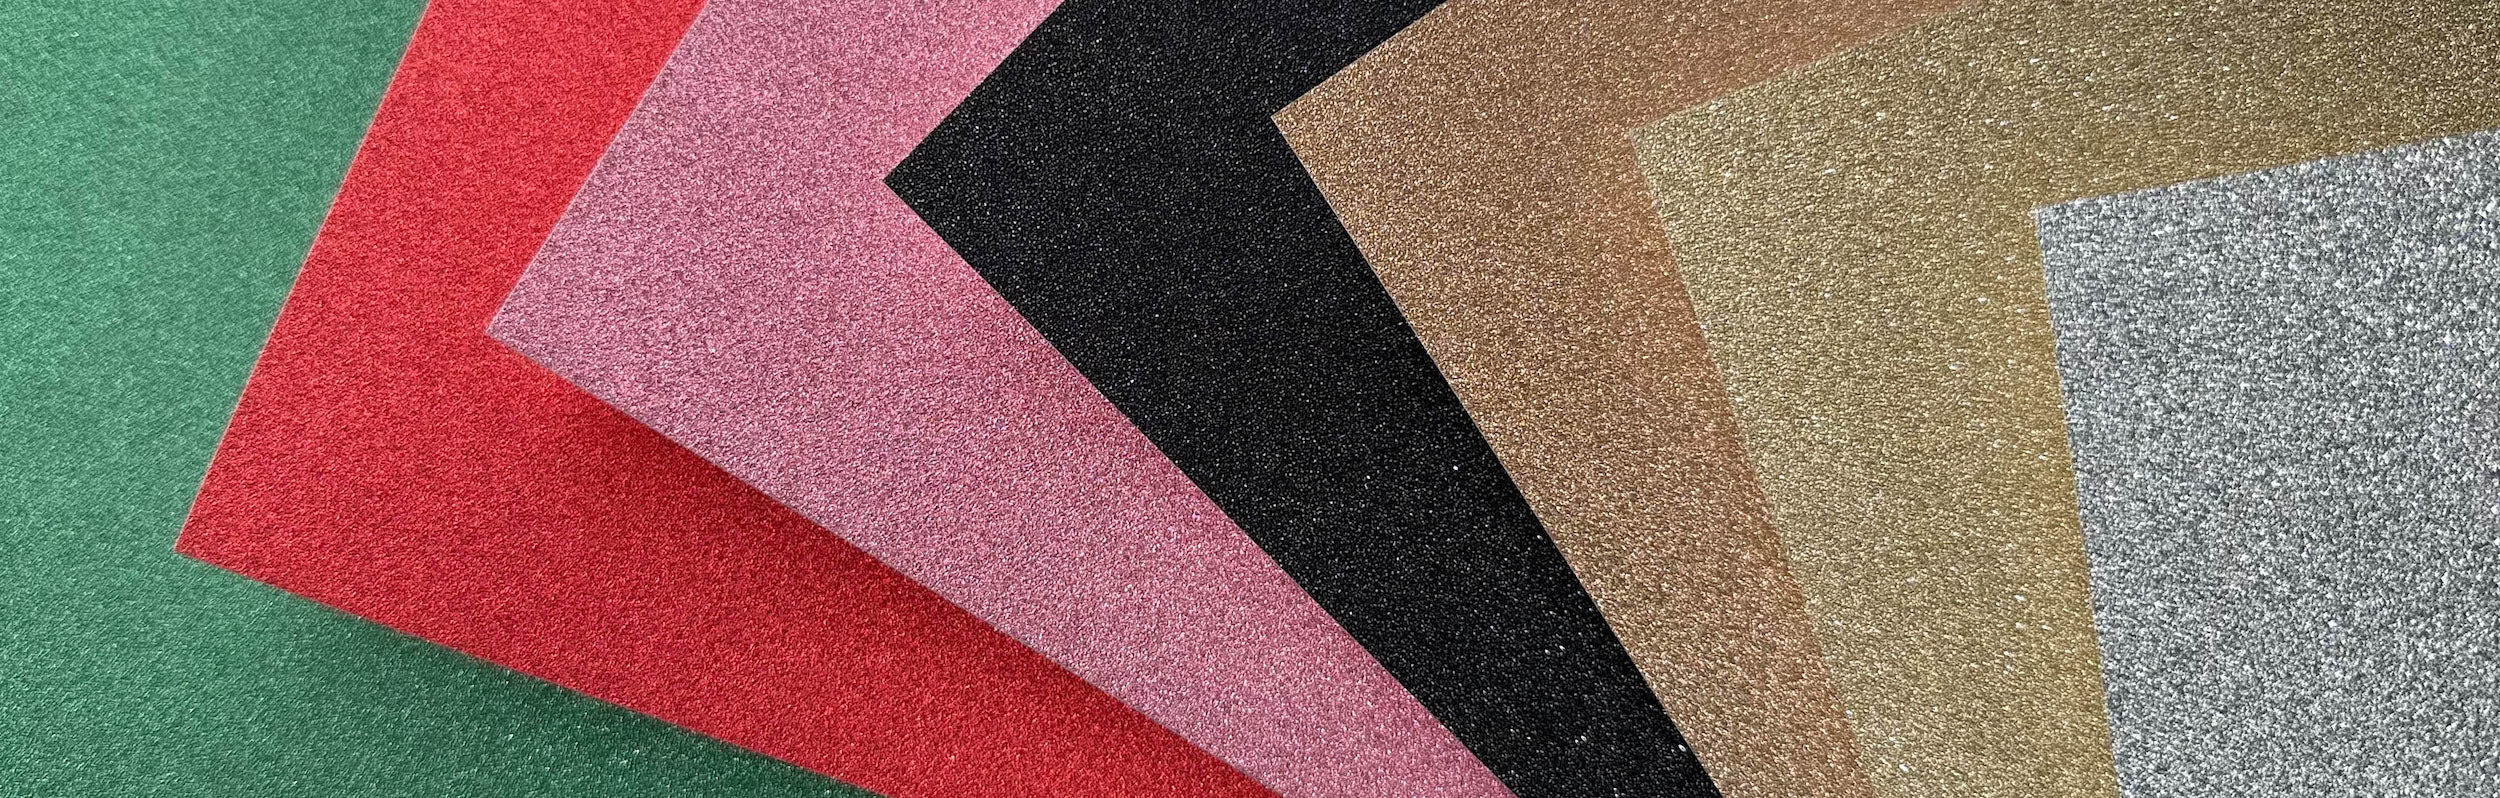 SILVER Mirri Sparkle 'No Mess' Glitter Paper – The 12x12 Cardstock